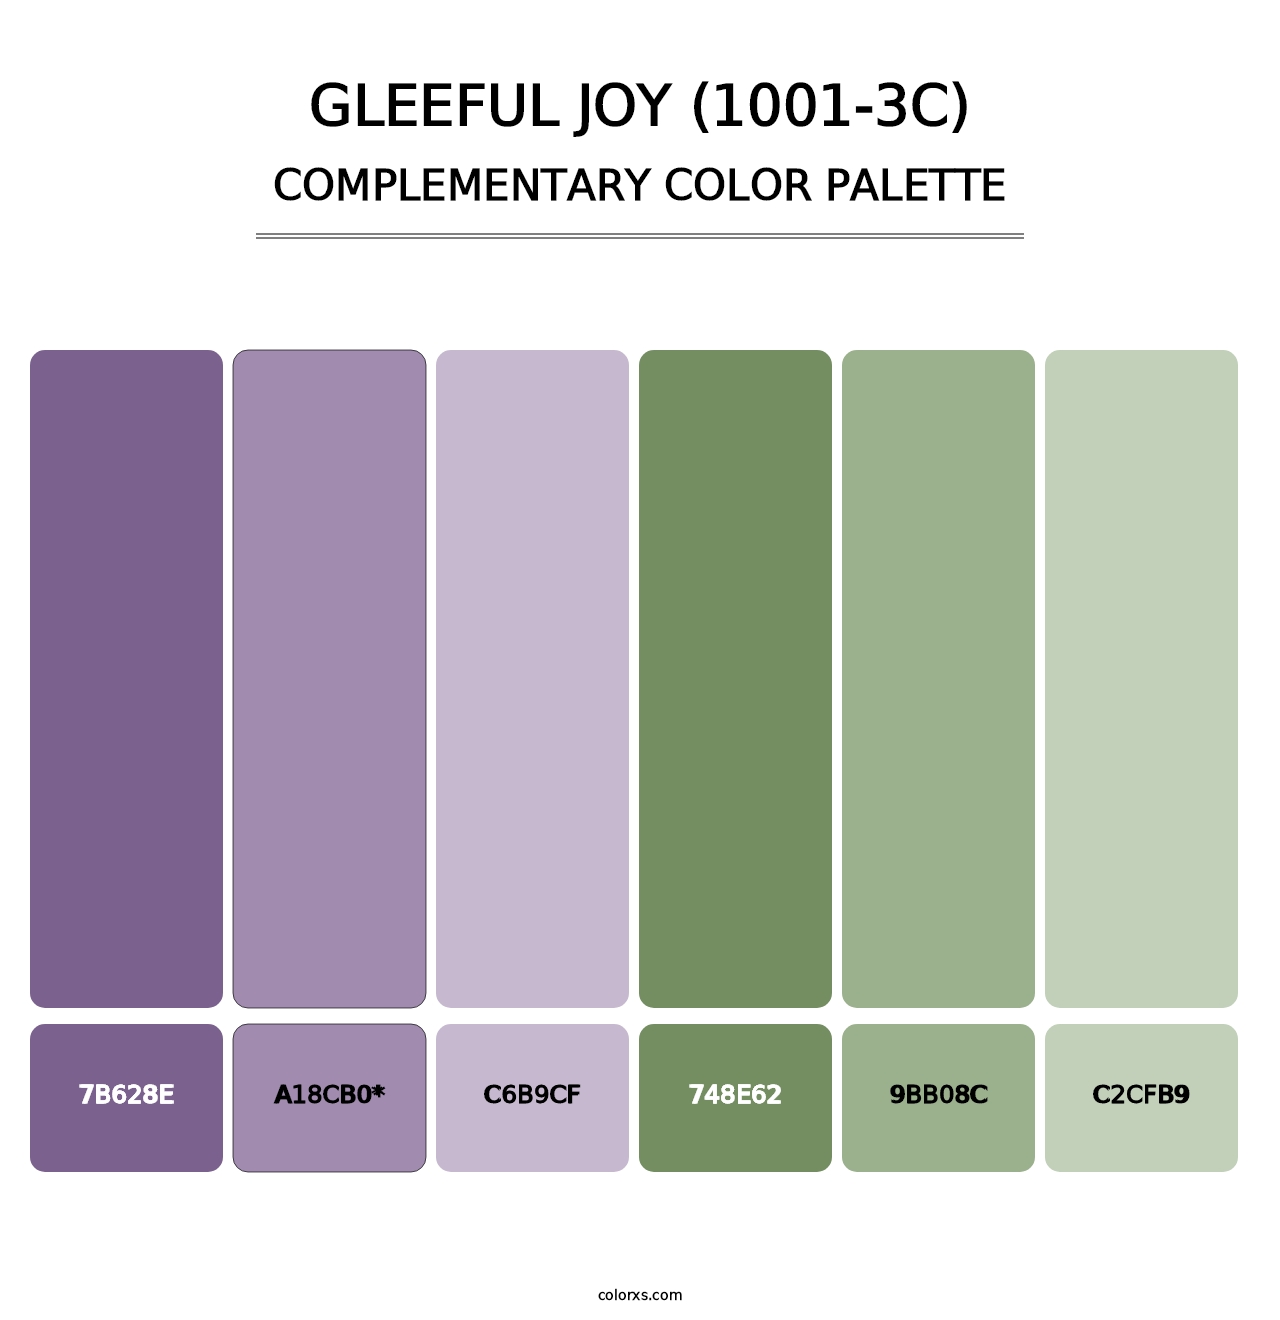 Gleeful Joy (1001-3C) - Complementary Color Palette